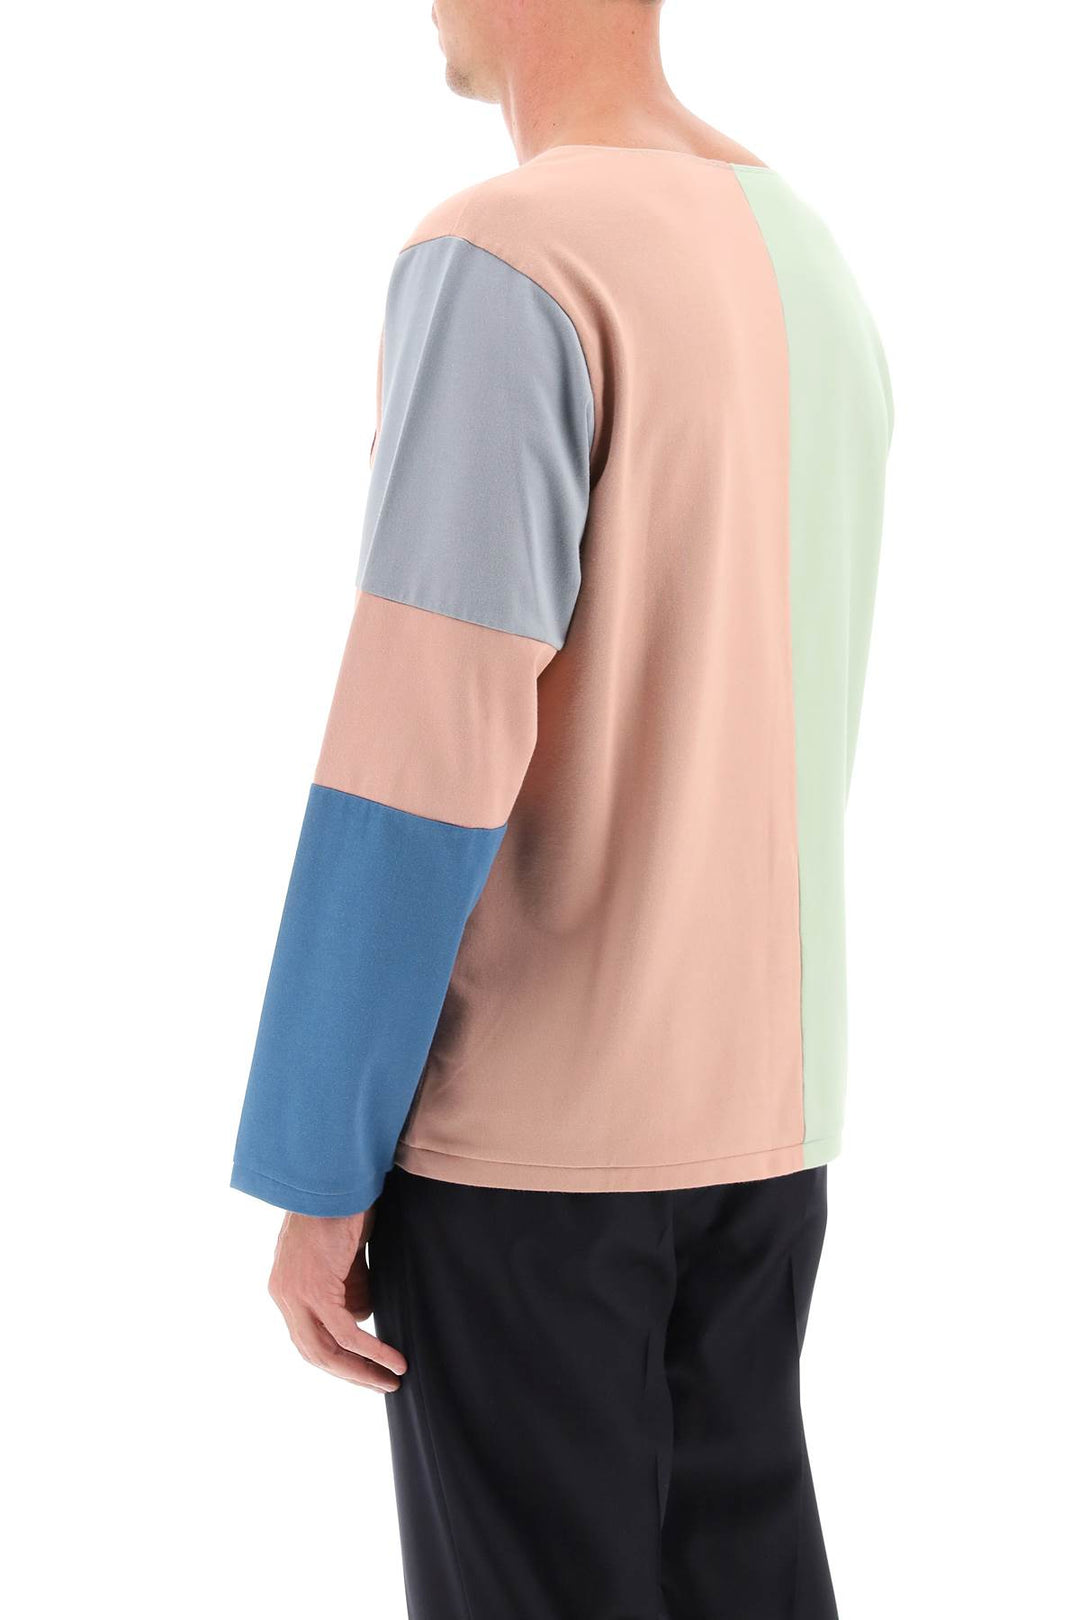 Bode Vista Long Sleeved T Shirt   Multicolor